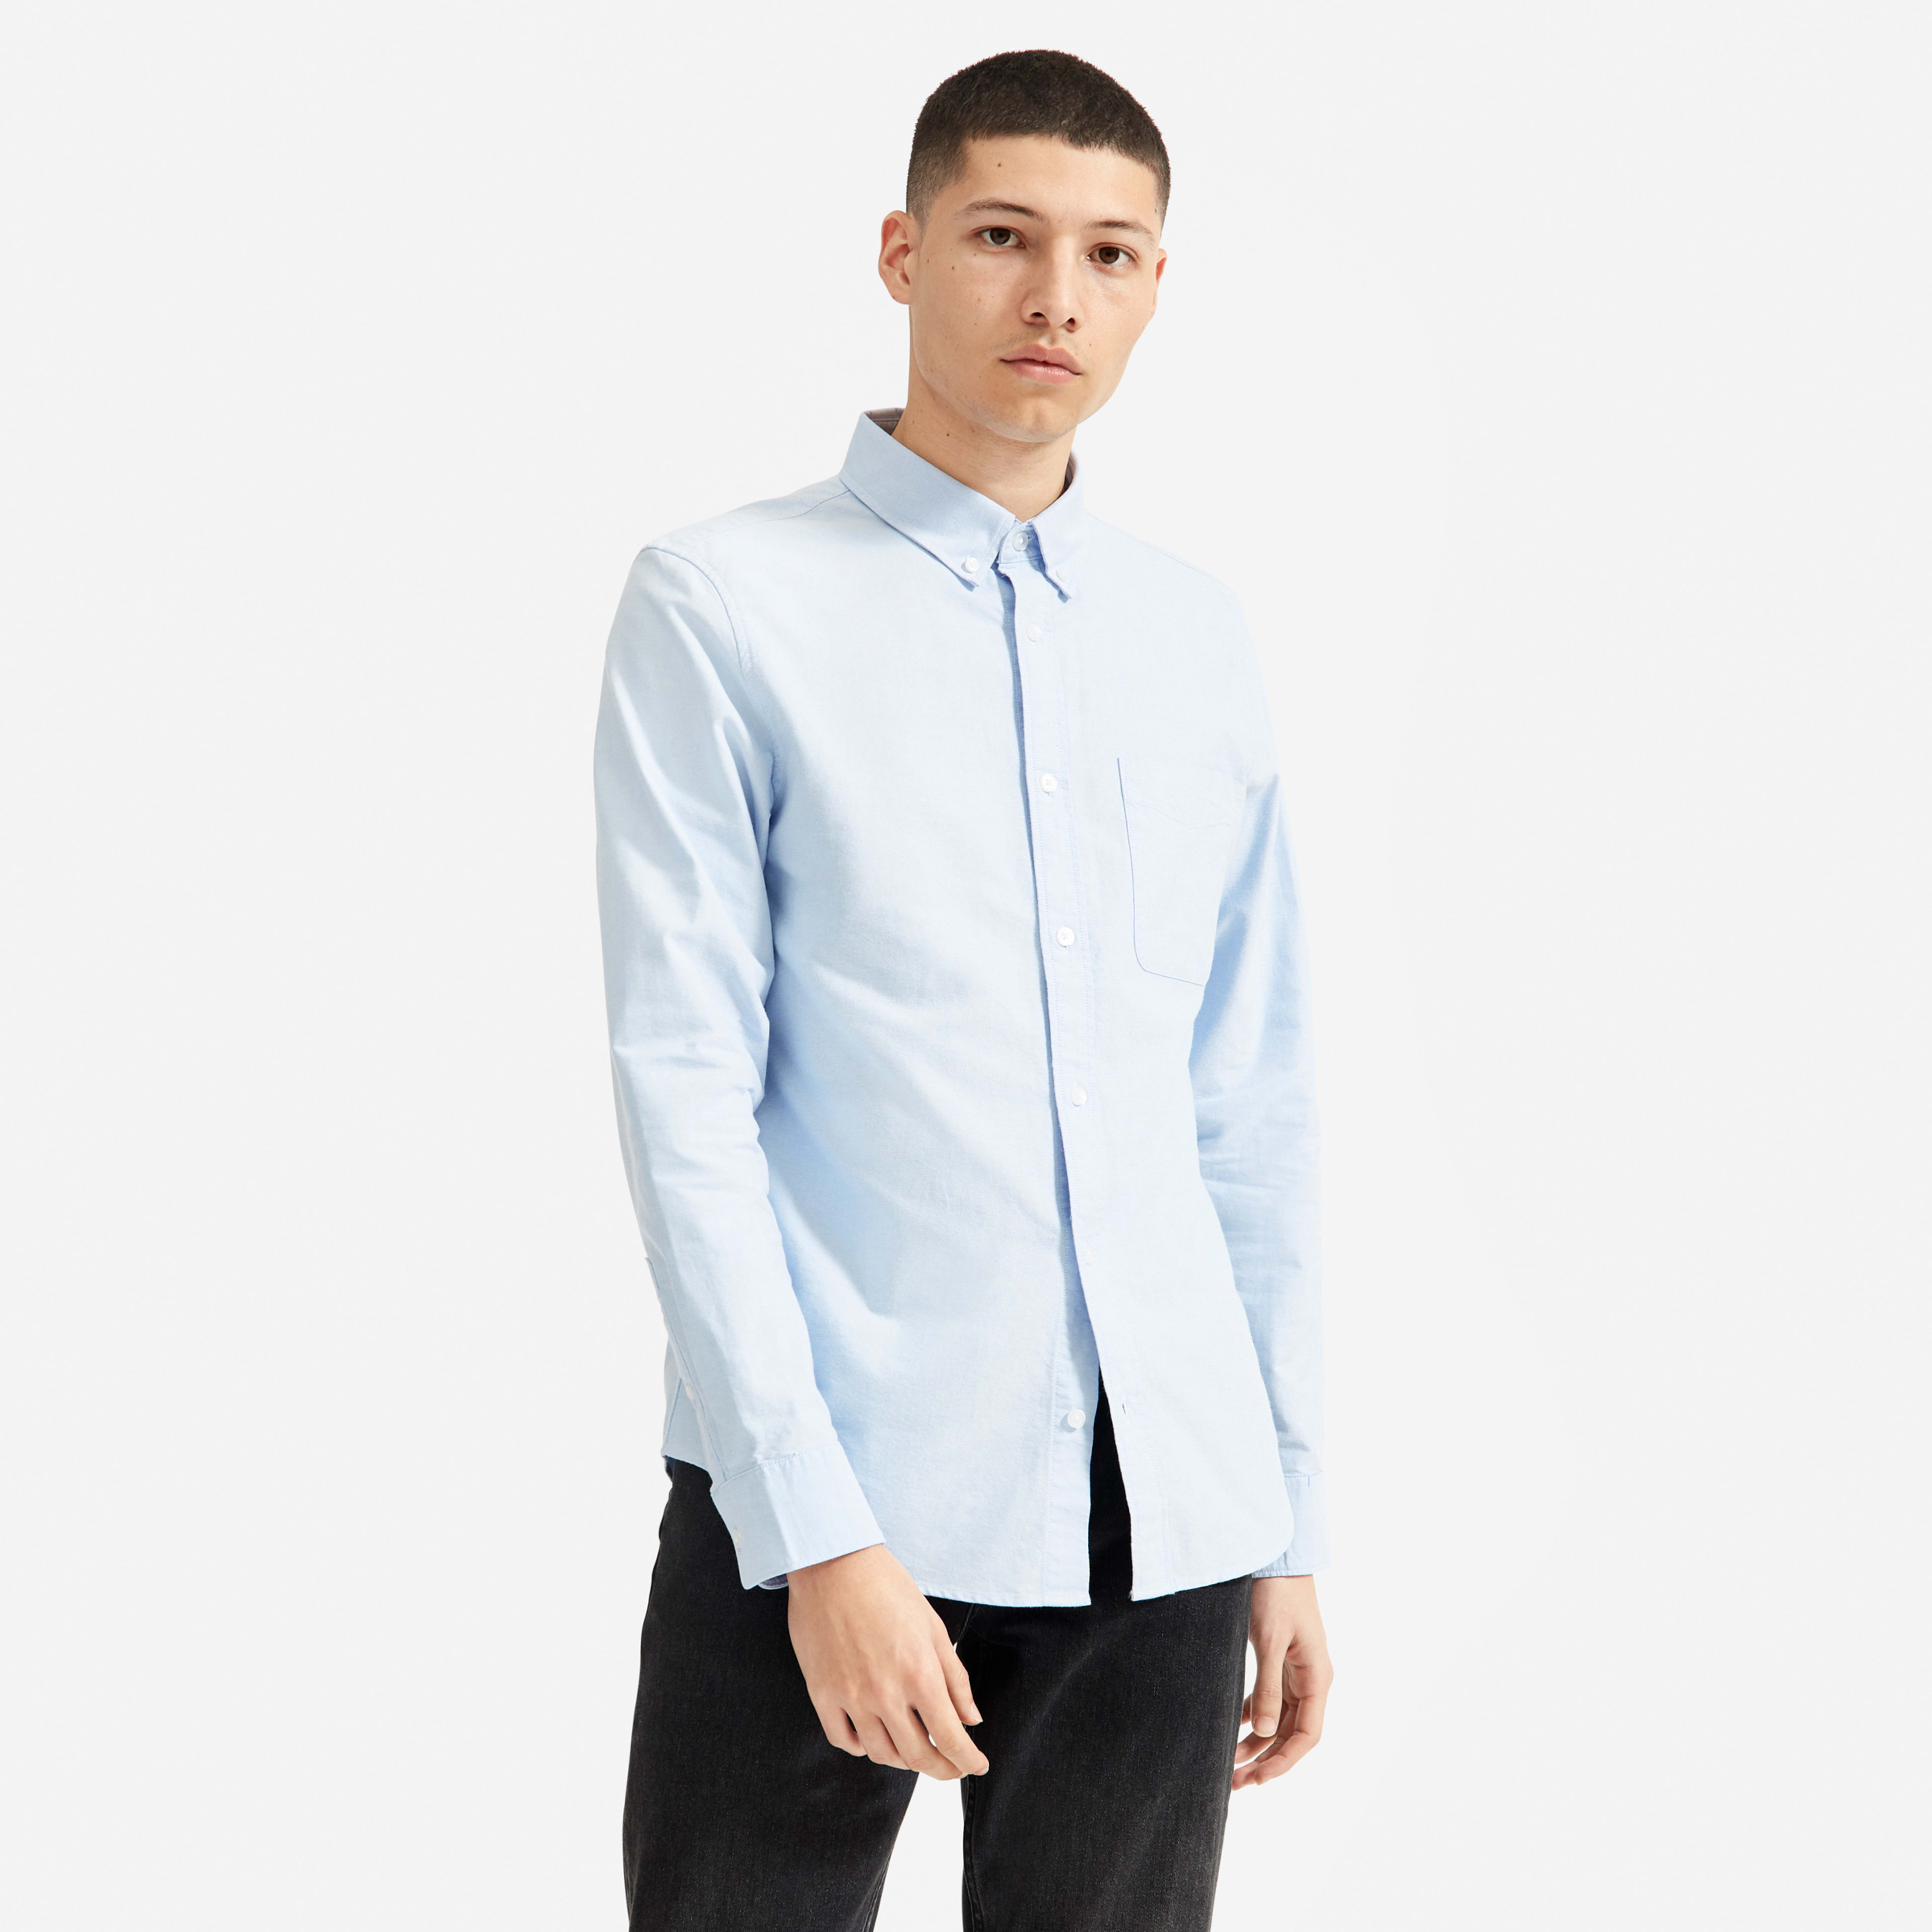 Men's Slim Fit Japanese Oxford | Uniform Shirt by Everlane in Light Blue, Size XS